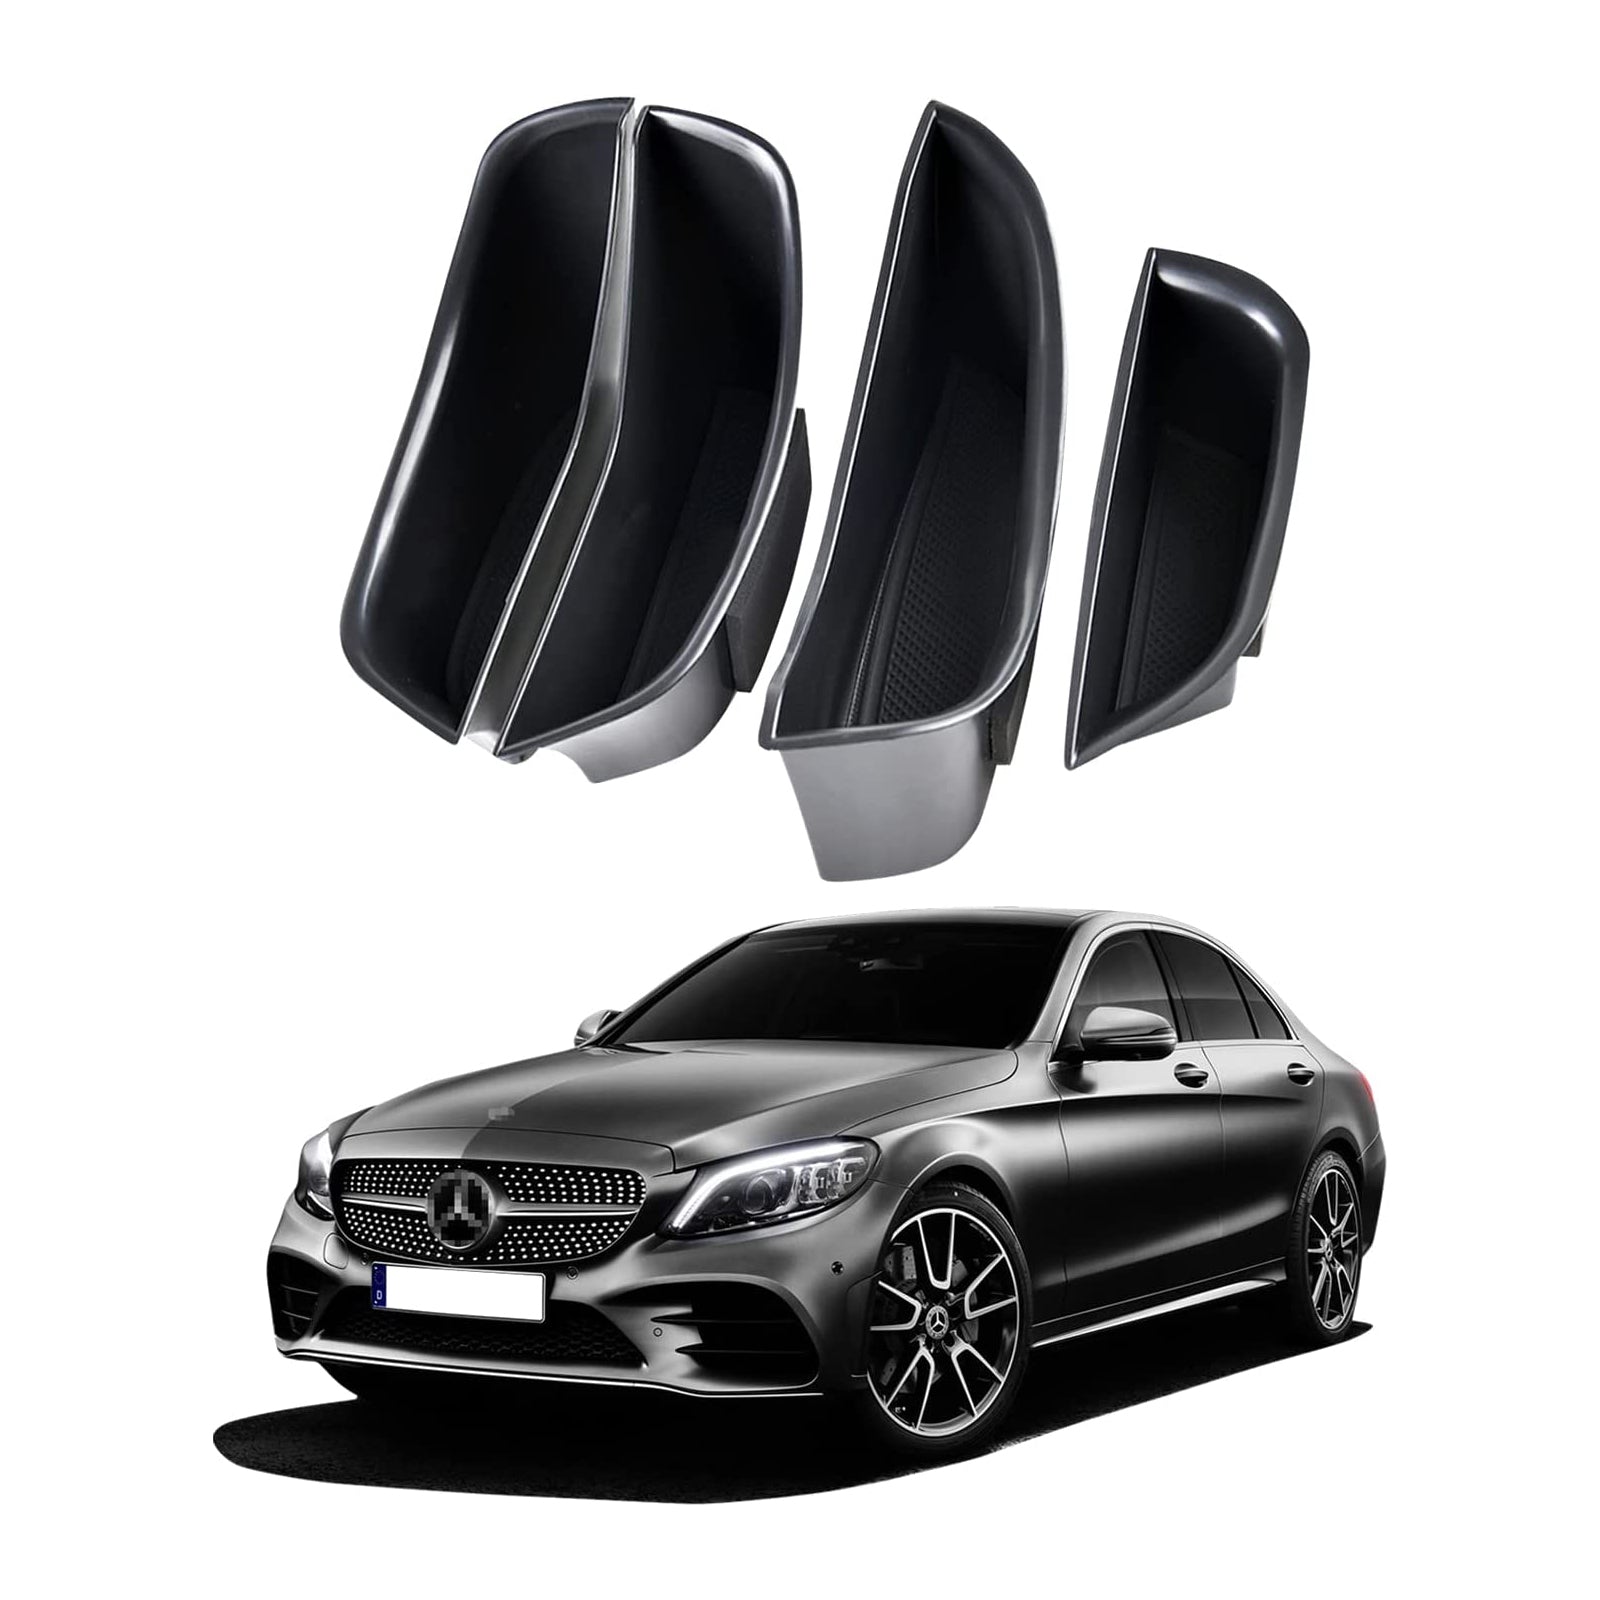 Mercedes C-Class W205 GLC X253 Car Door Storage Box 2015 - LFOTPP Car Accessories